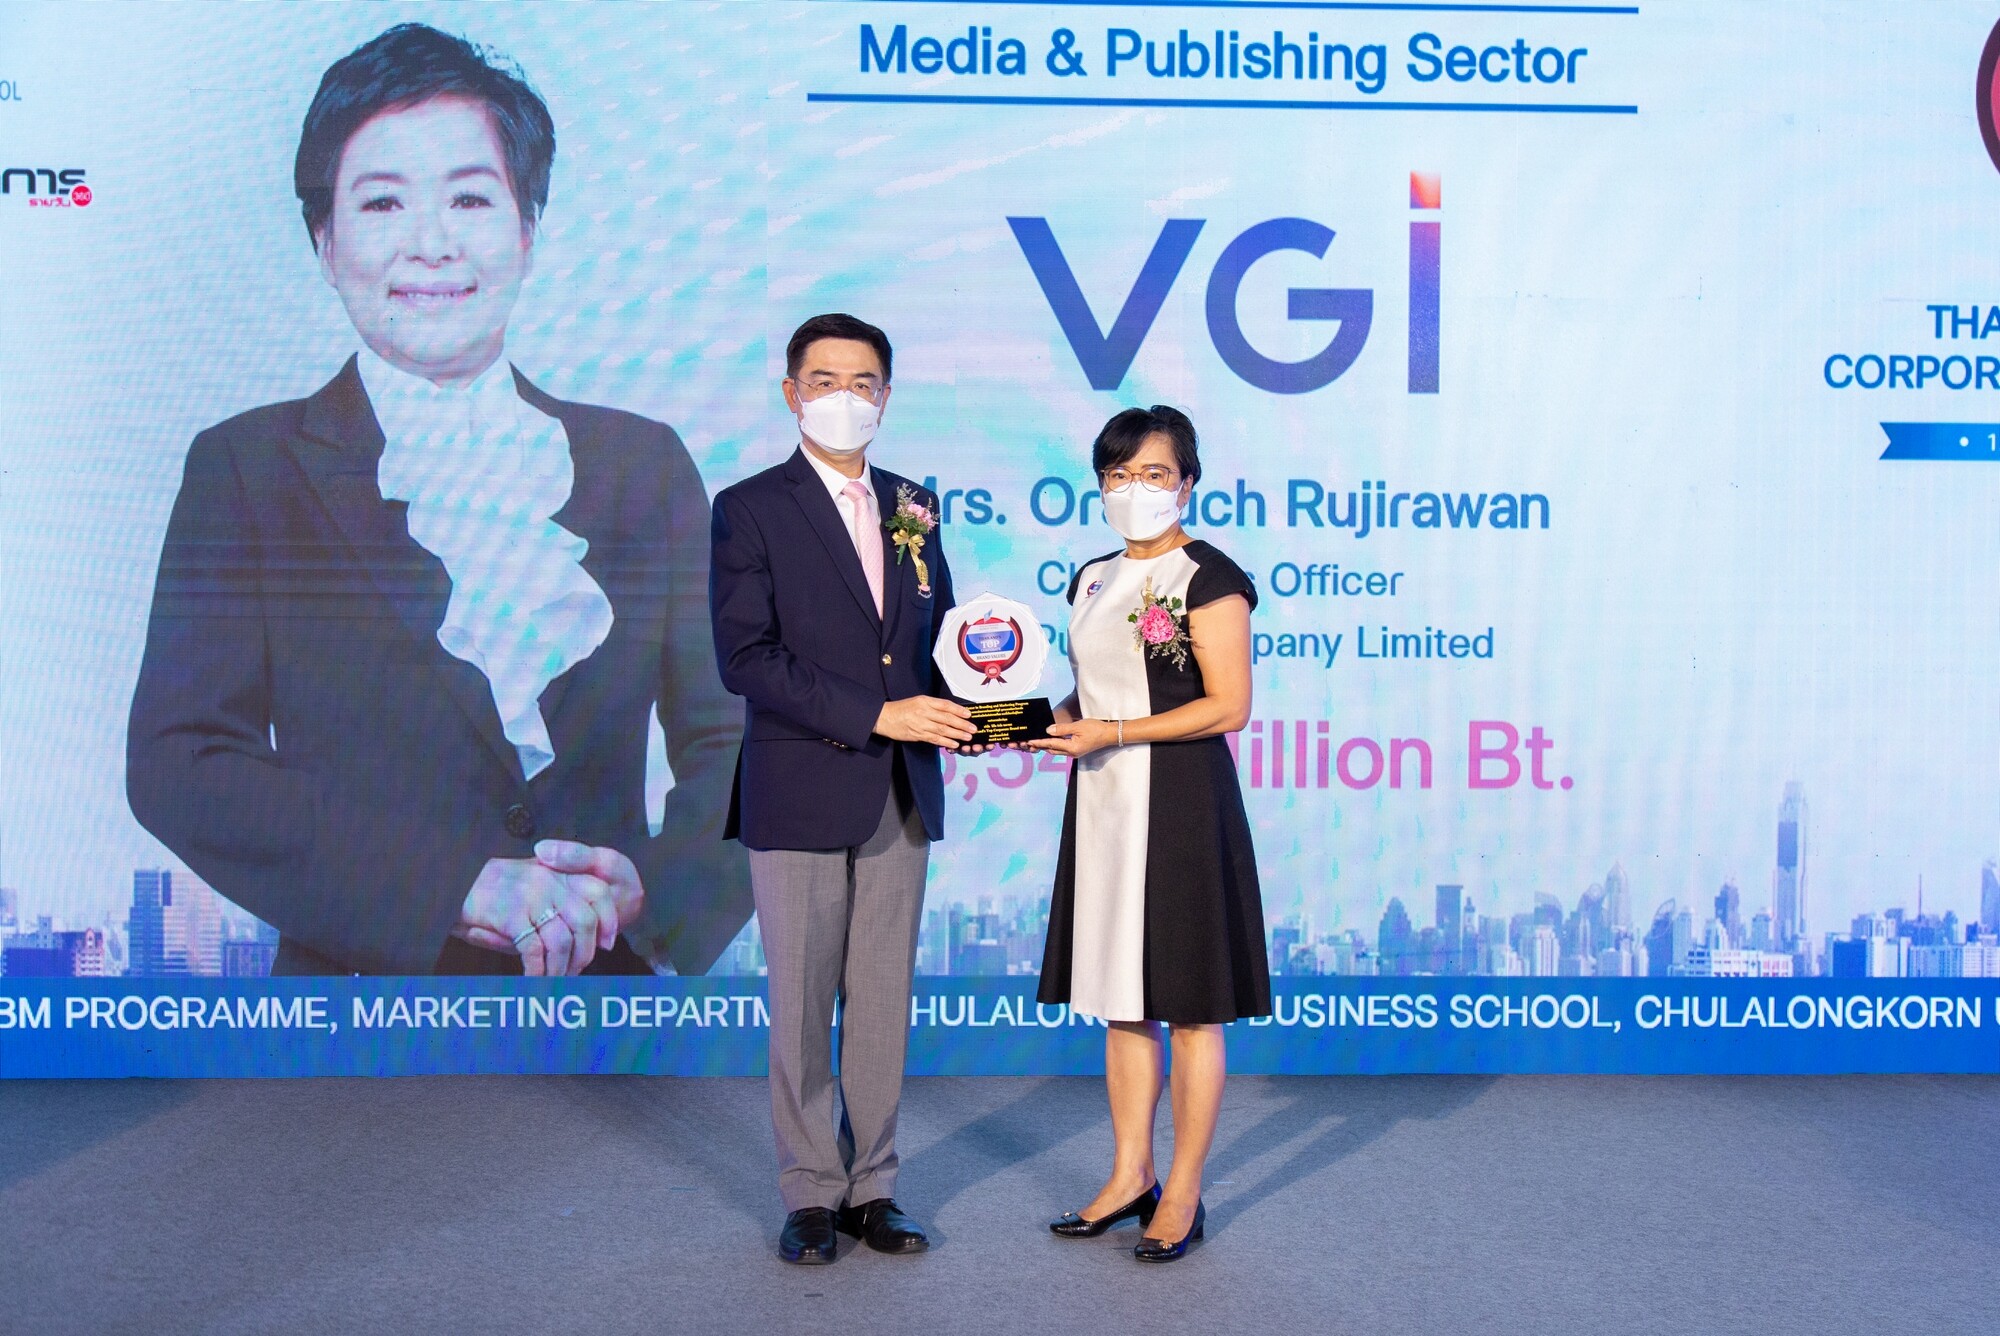 VGI ฉลองรางวัล Thailand's Top Corporate Brand 2021 สุดยอดองค์กรที่มีมูลค่าแบรนด์สูงสุด เป็นครั้งที่ 5